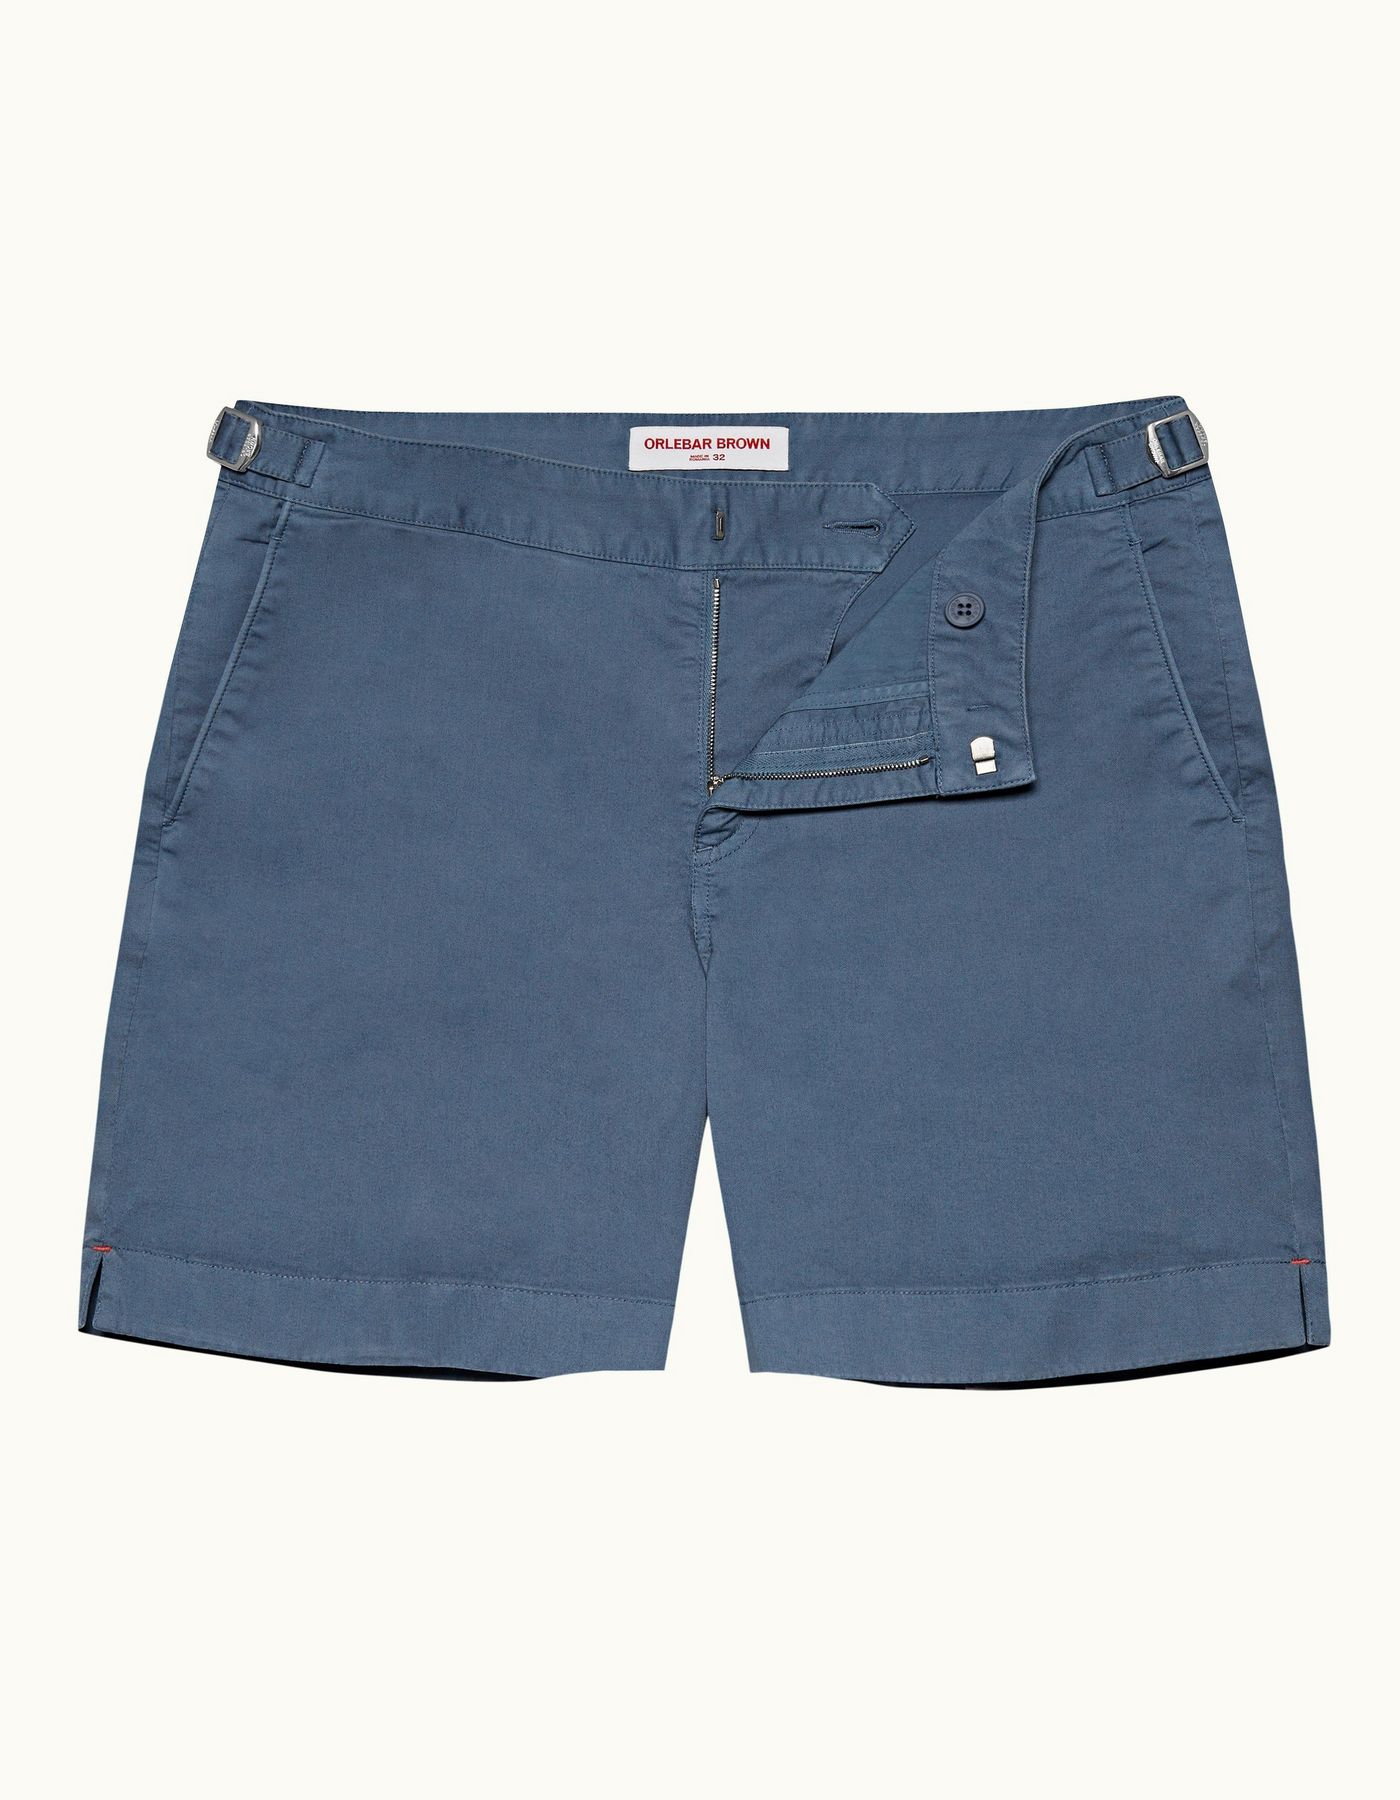 Bulldog Cotton Twill - Mens Blue Smoke Mid-Length Cotton Twill Shorts